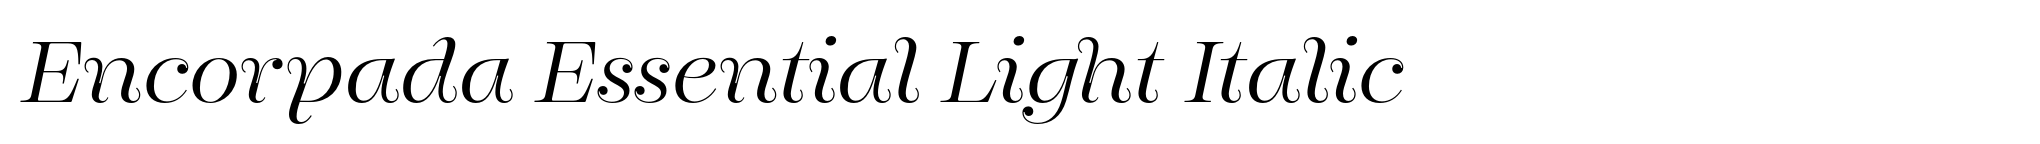 Encorpada Essential Light Italic image